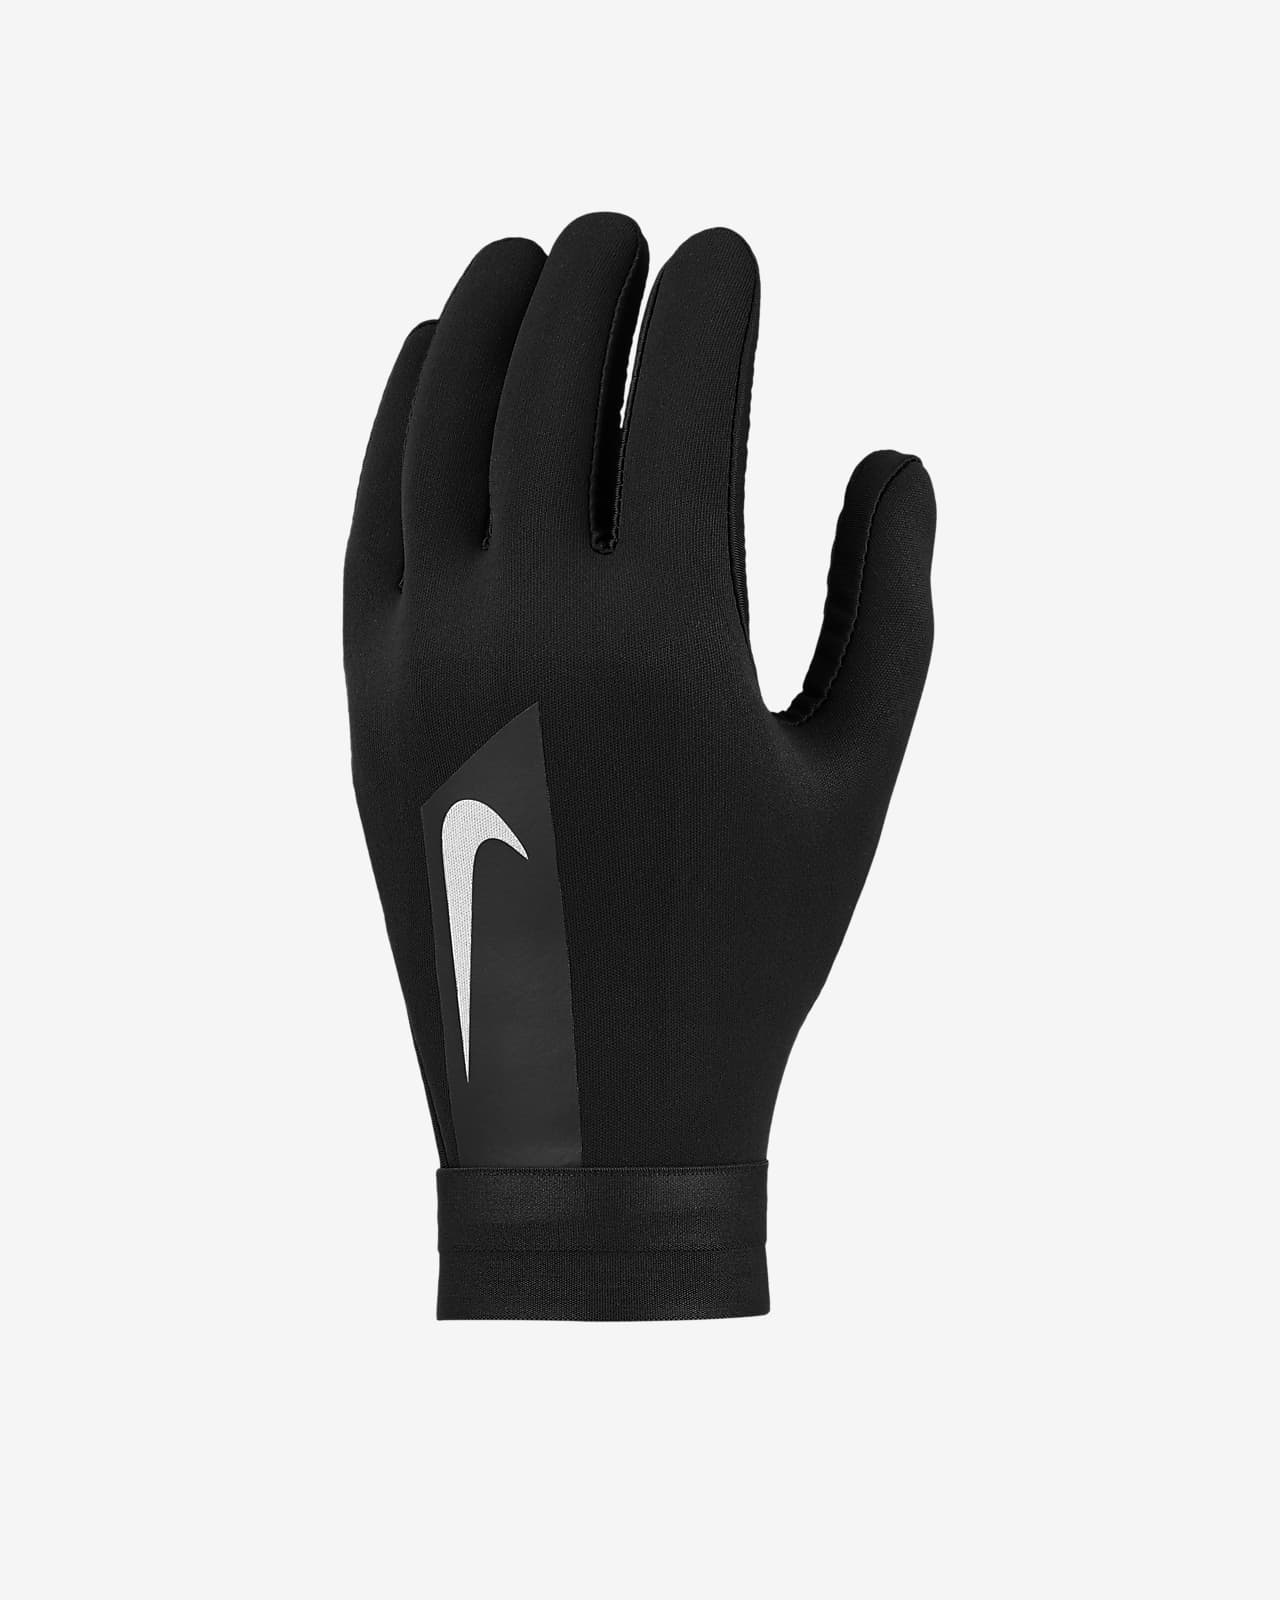 nike vapormax gloves